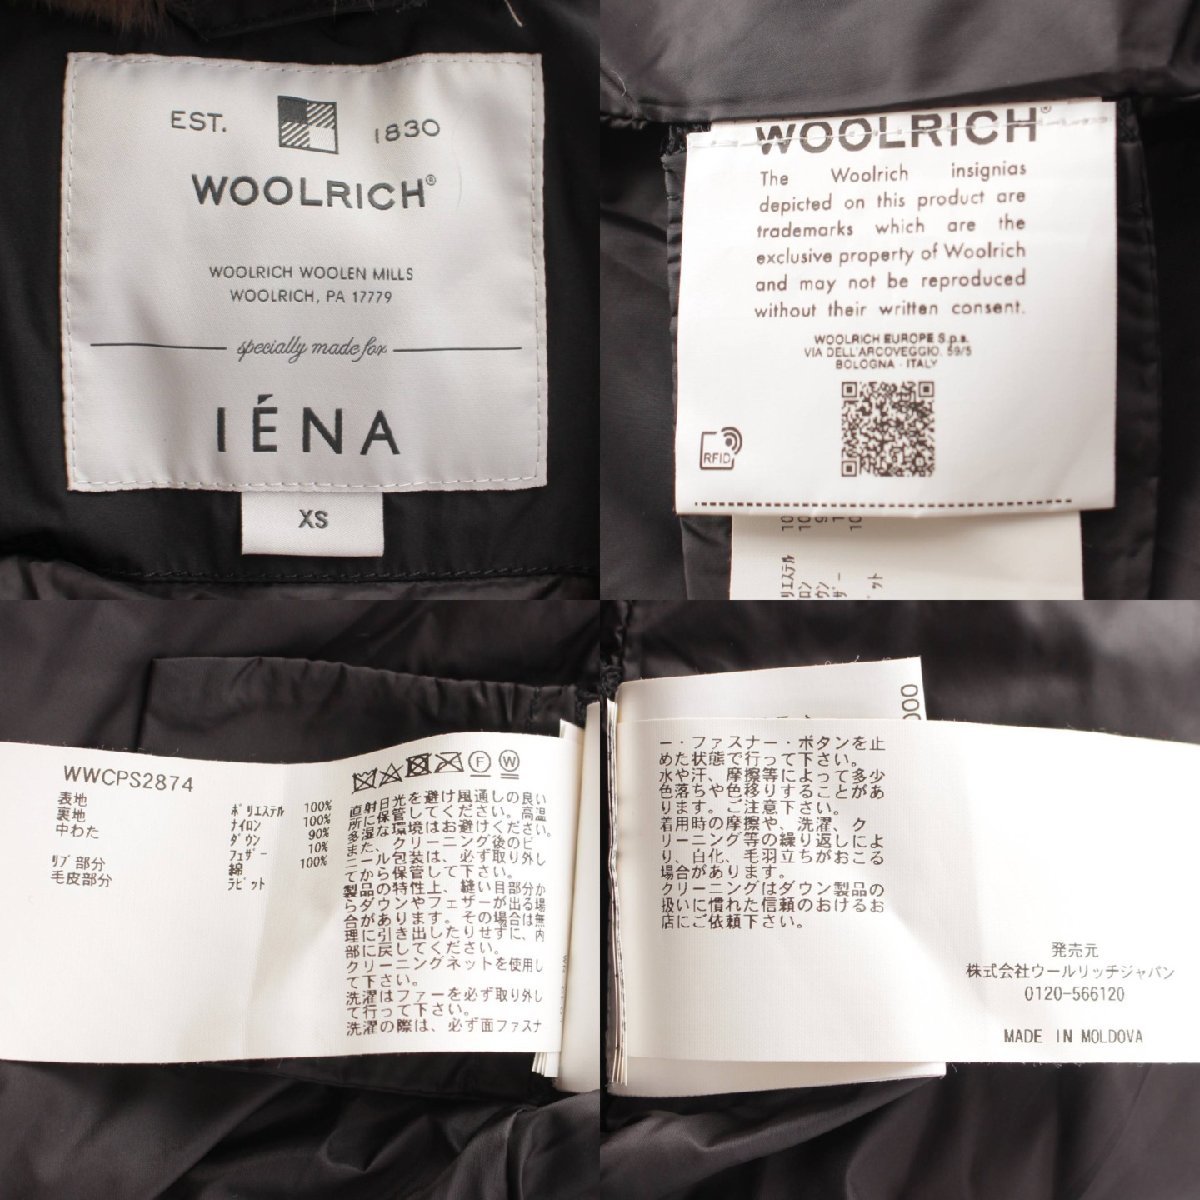 [ Woolrich ]WOOLRICH Iena special order COCOON ESKIMO long down coat WWCPS2874 black XS [ used ][ regular goods guarantee ]194434